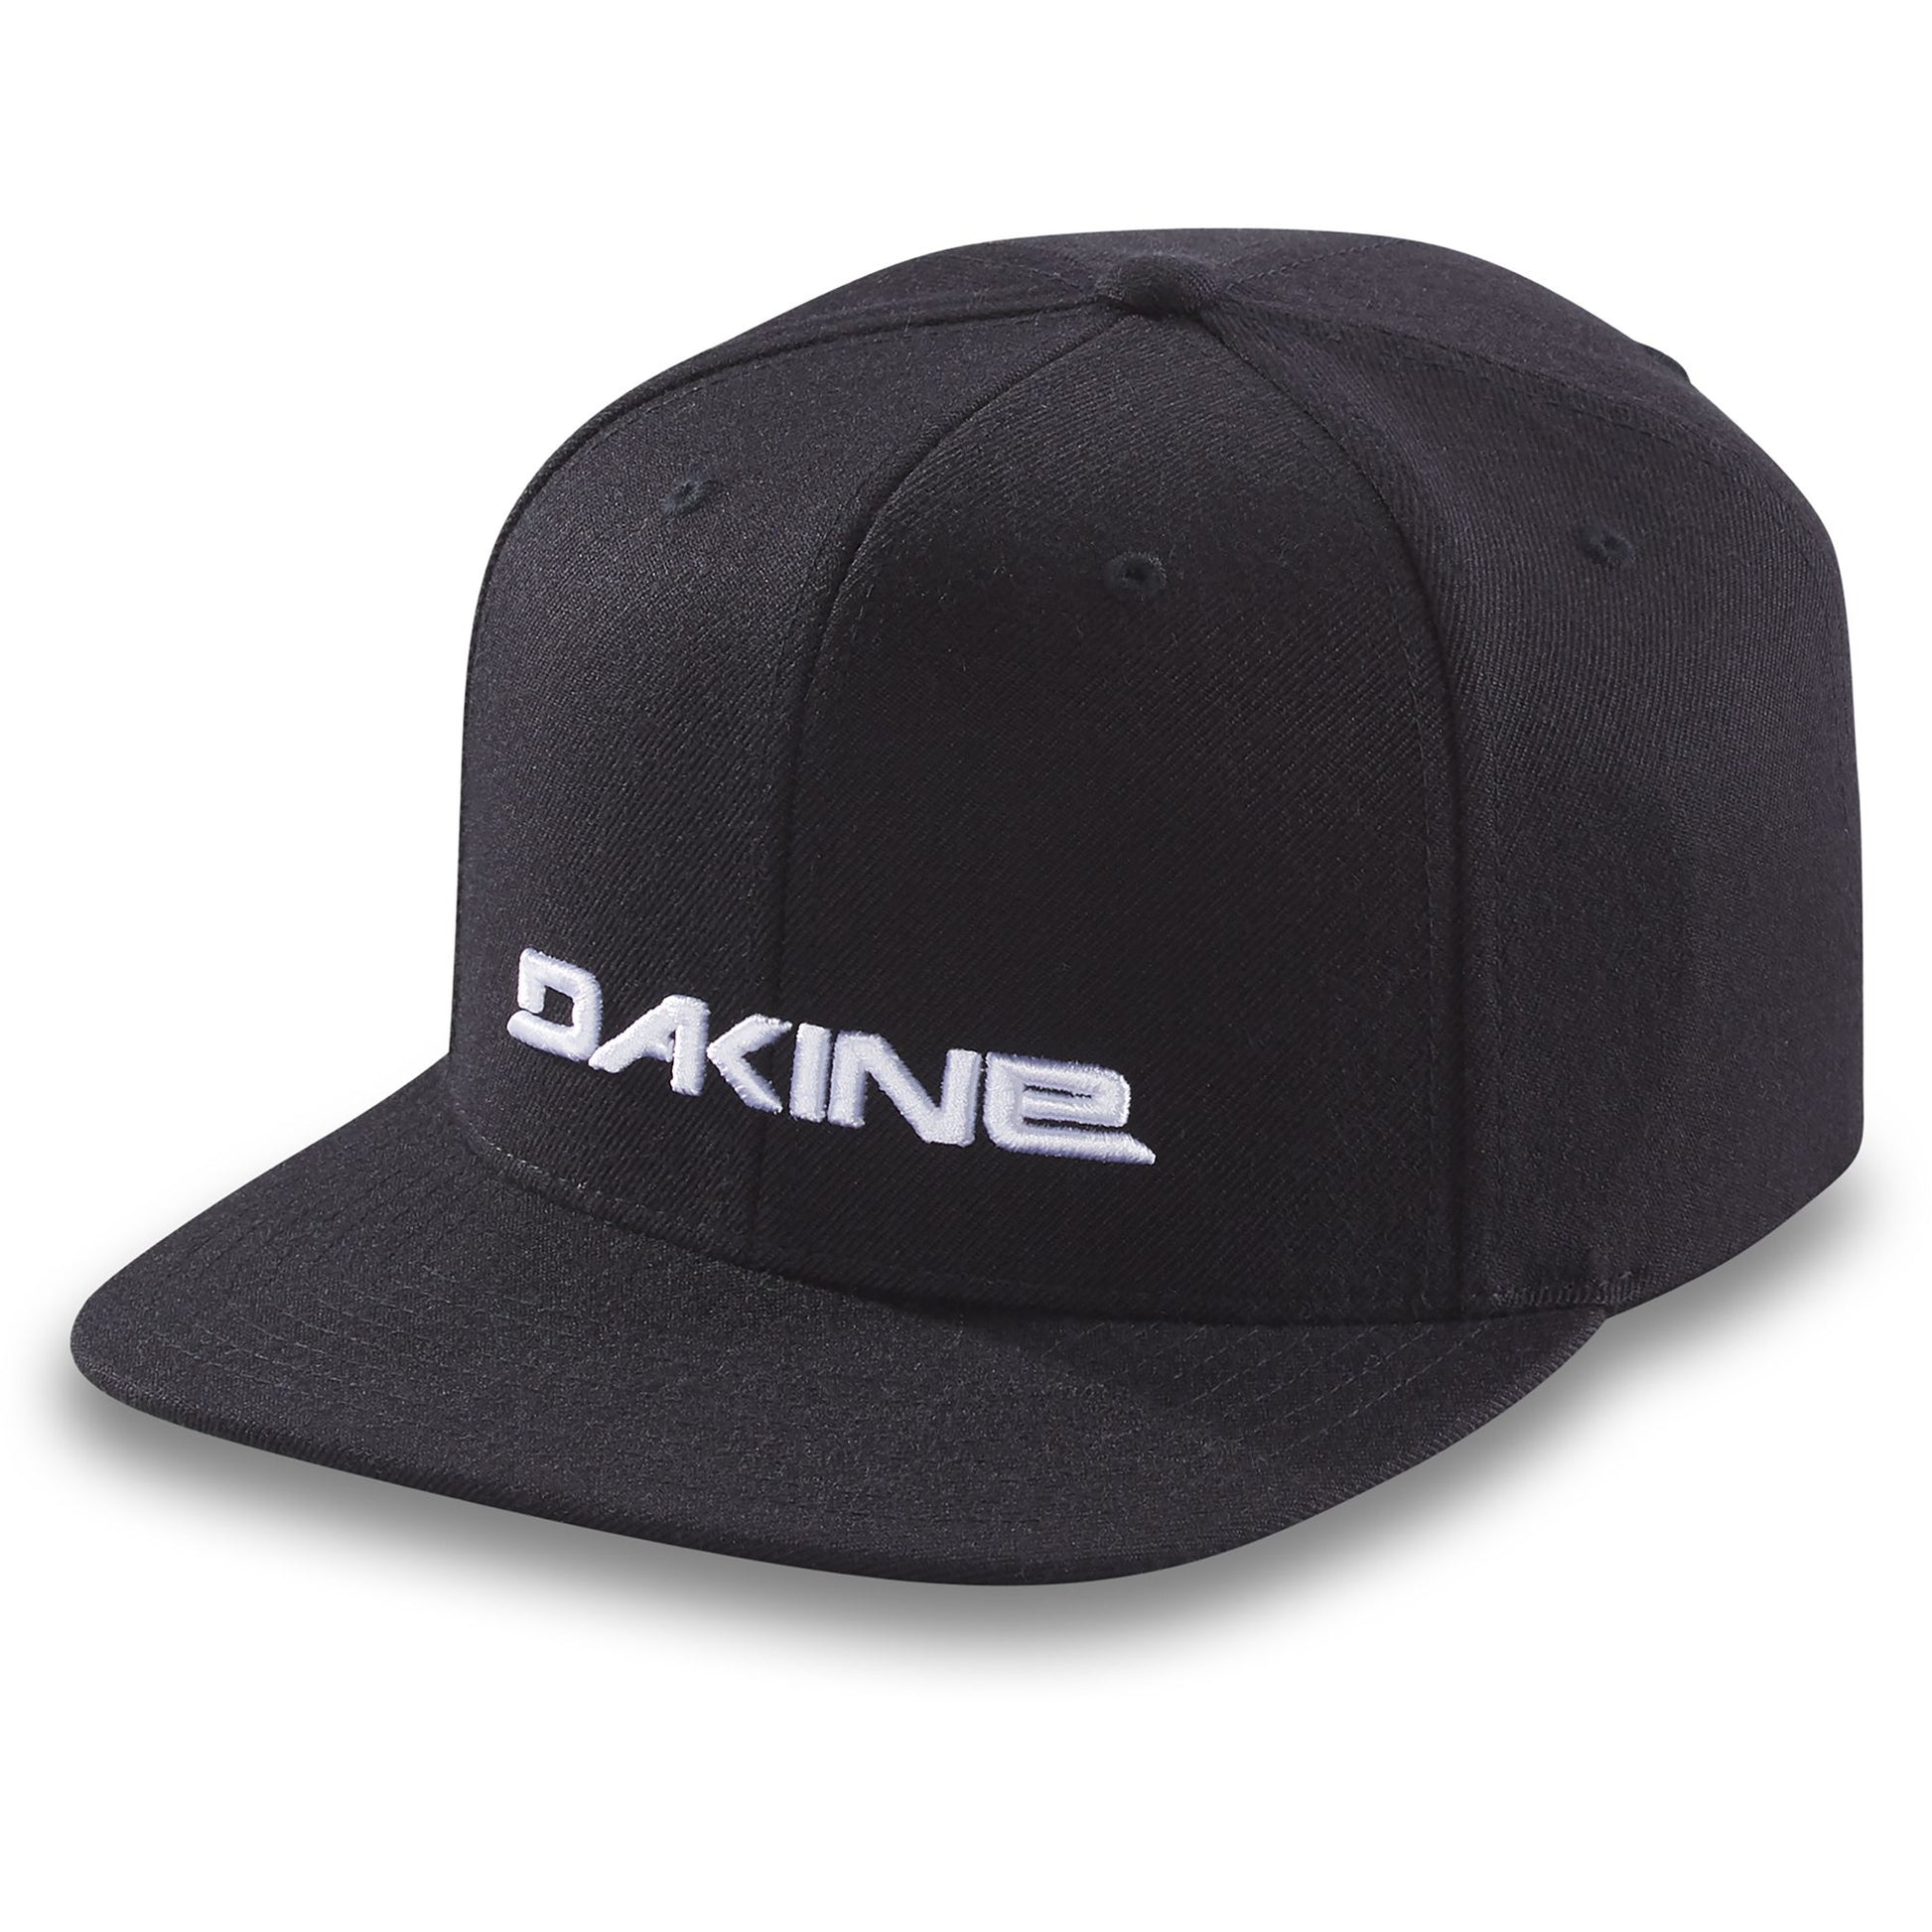 Dakine Classic Snapback Hat Hats